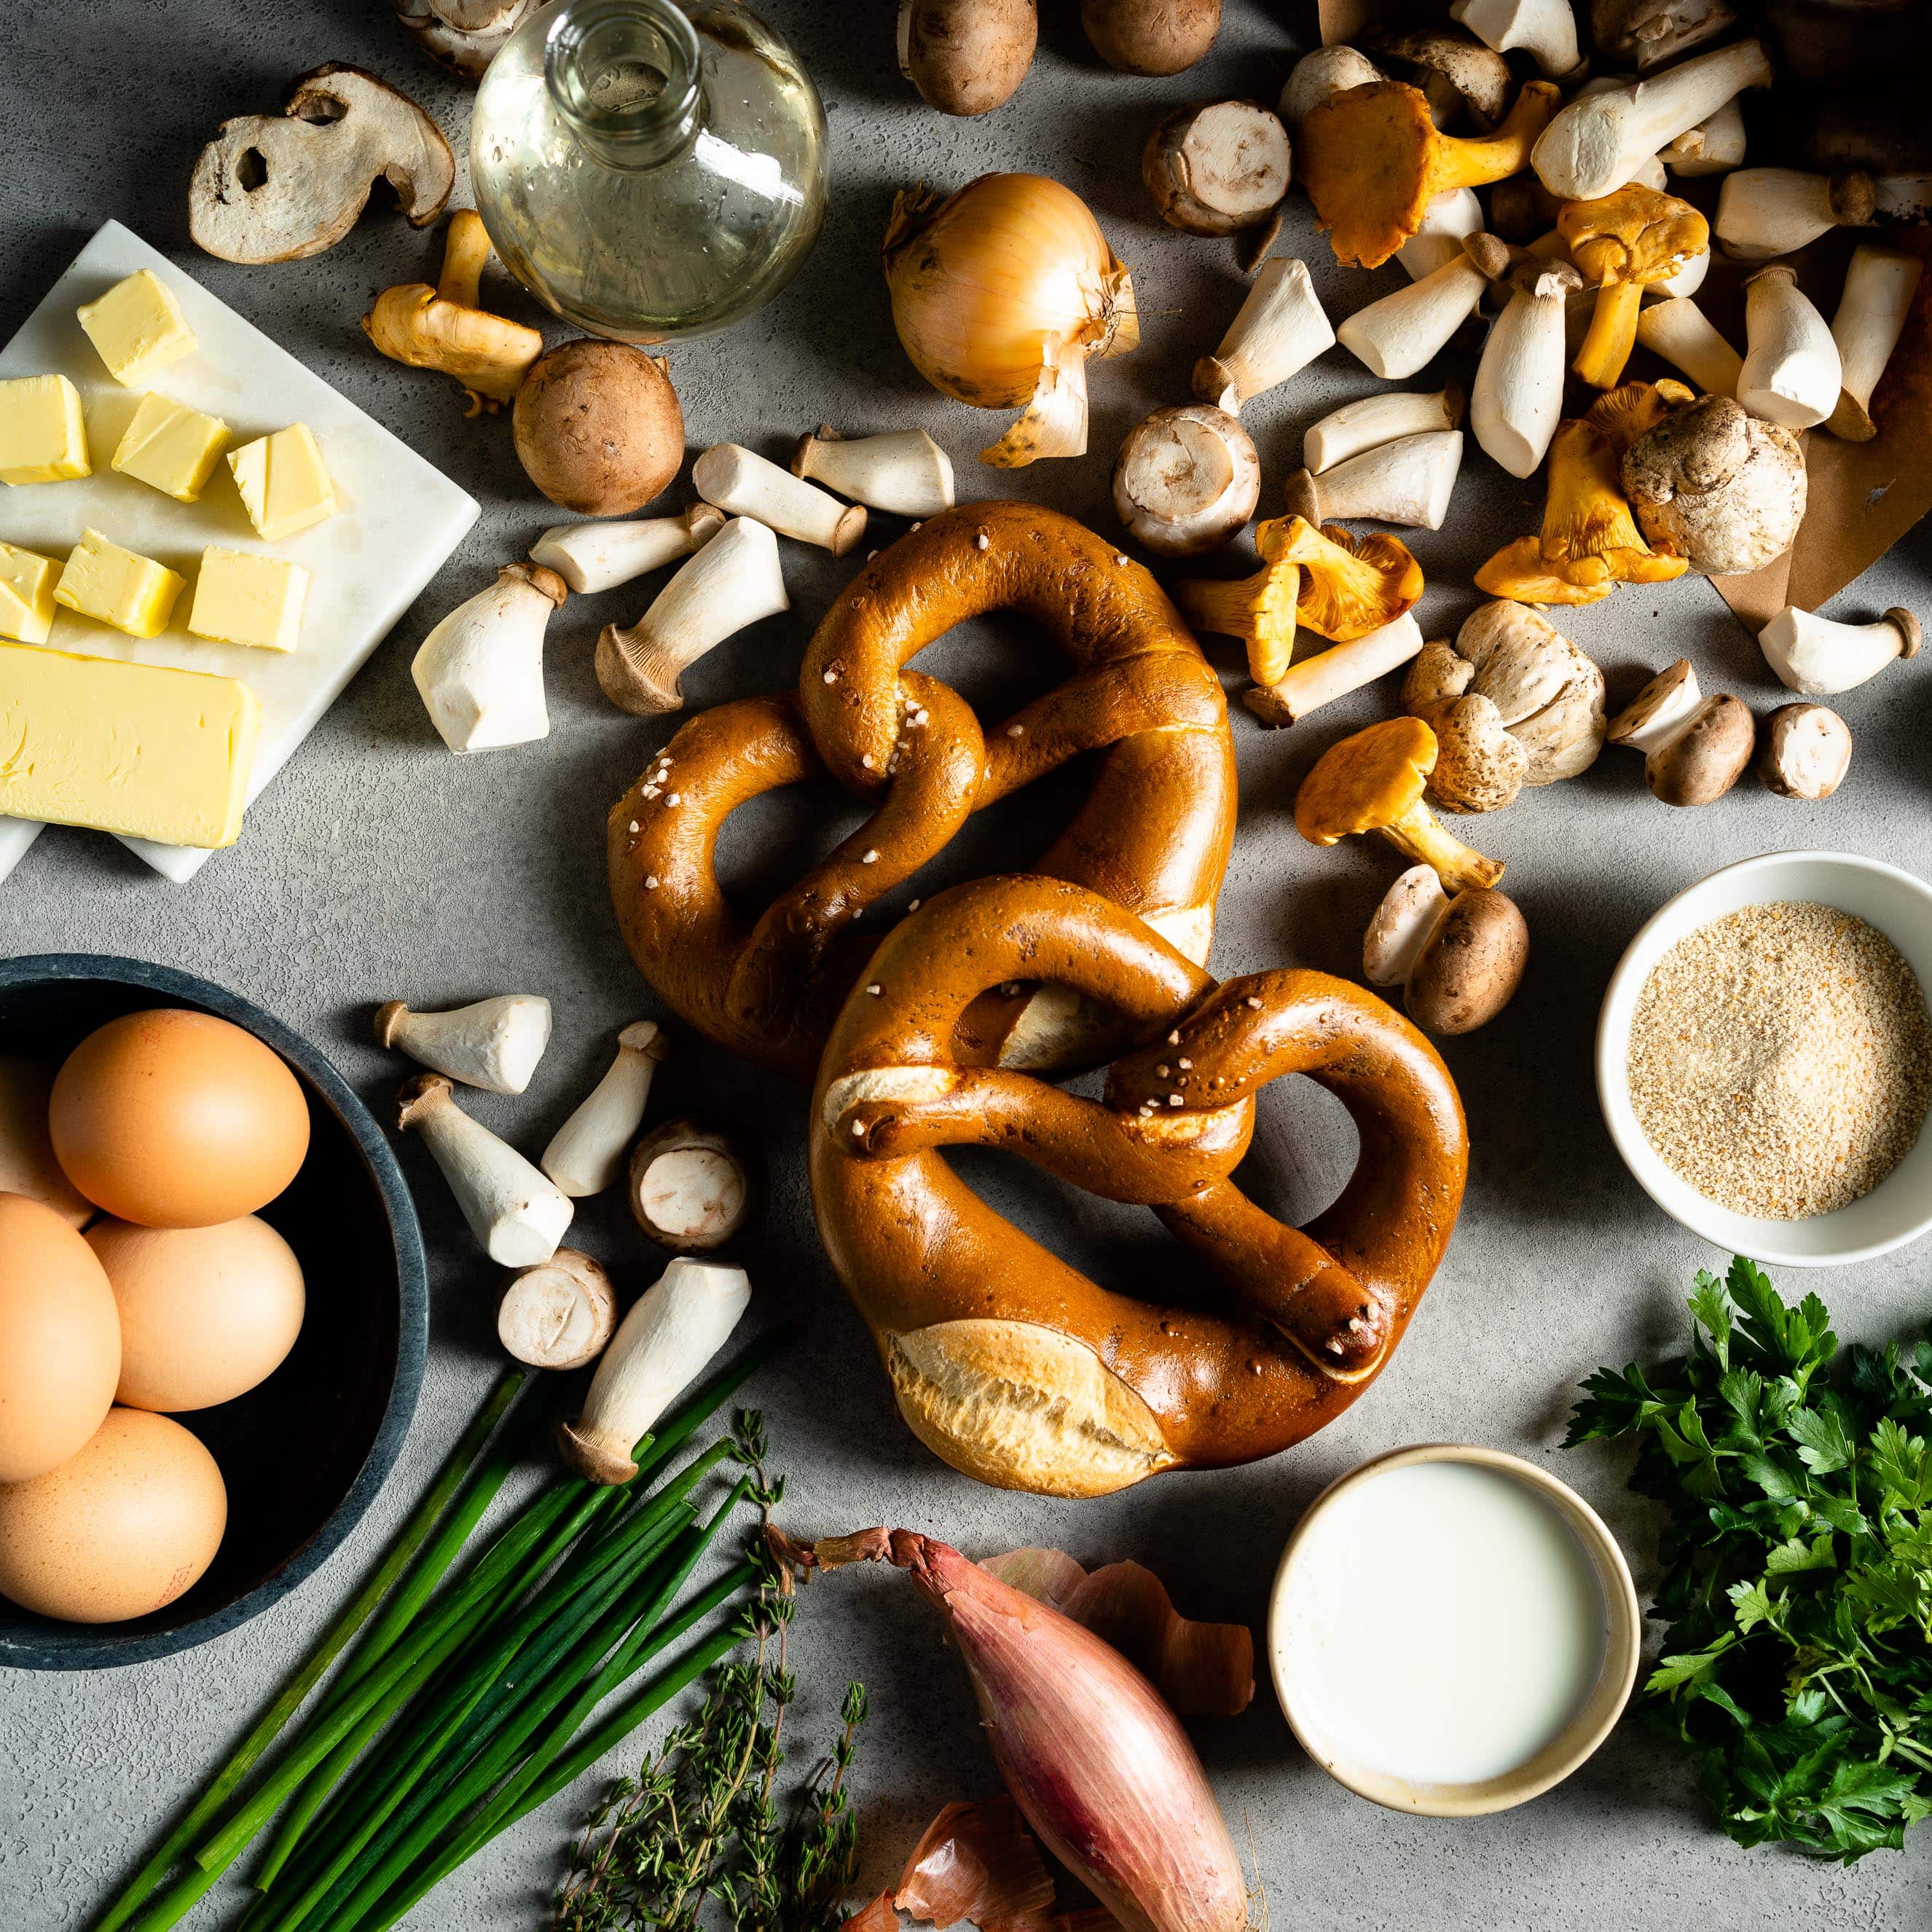 Mushroom ragout withBraun Australia Home Page Feature Tile 3 pretzel dumplings and herbs_ingredients_1x1.jpg